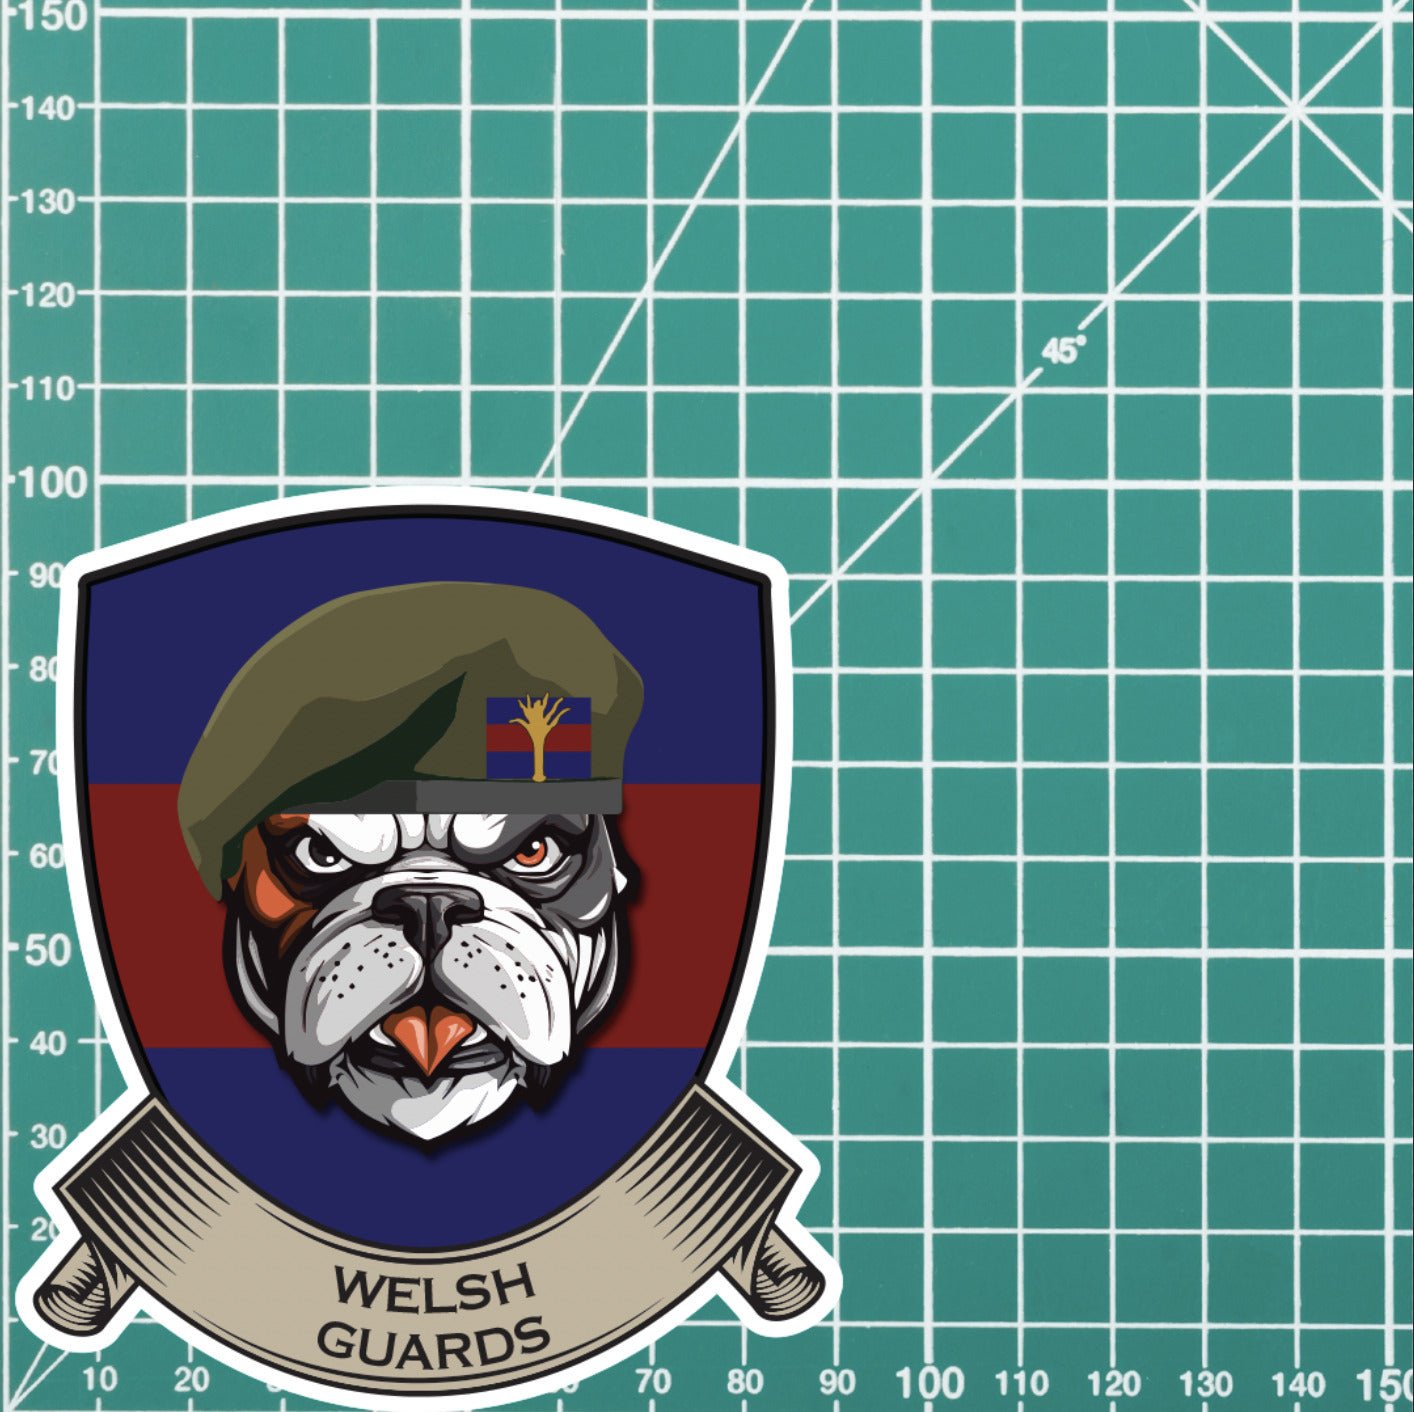 Welsh Guards TRF British Bulldog Vinyl Sticker - 10cm redplume